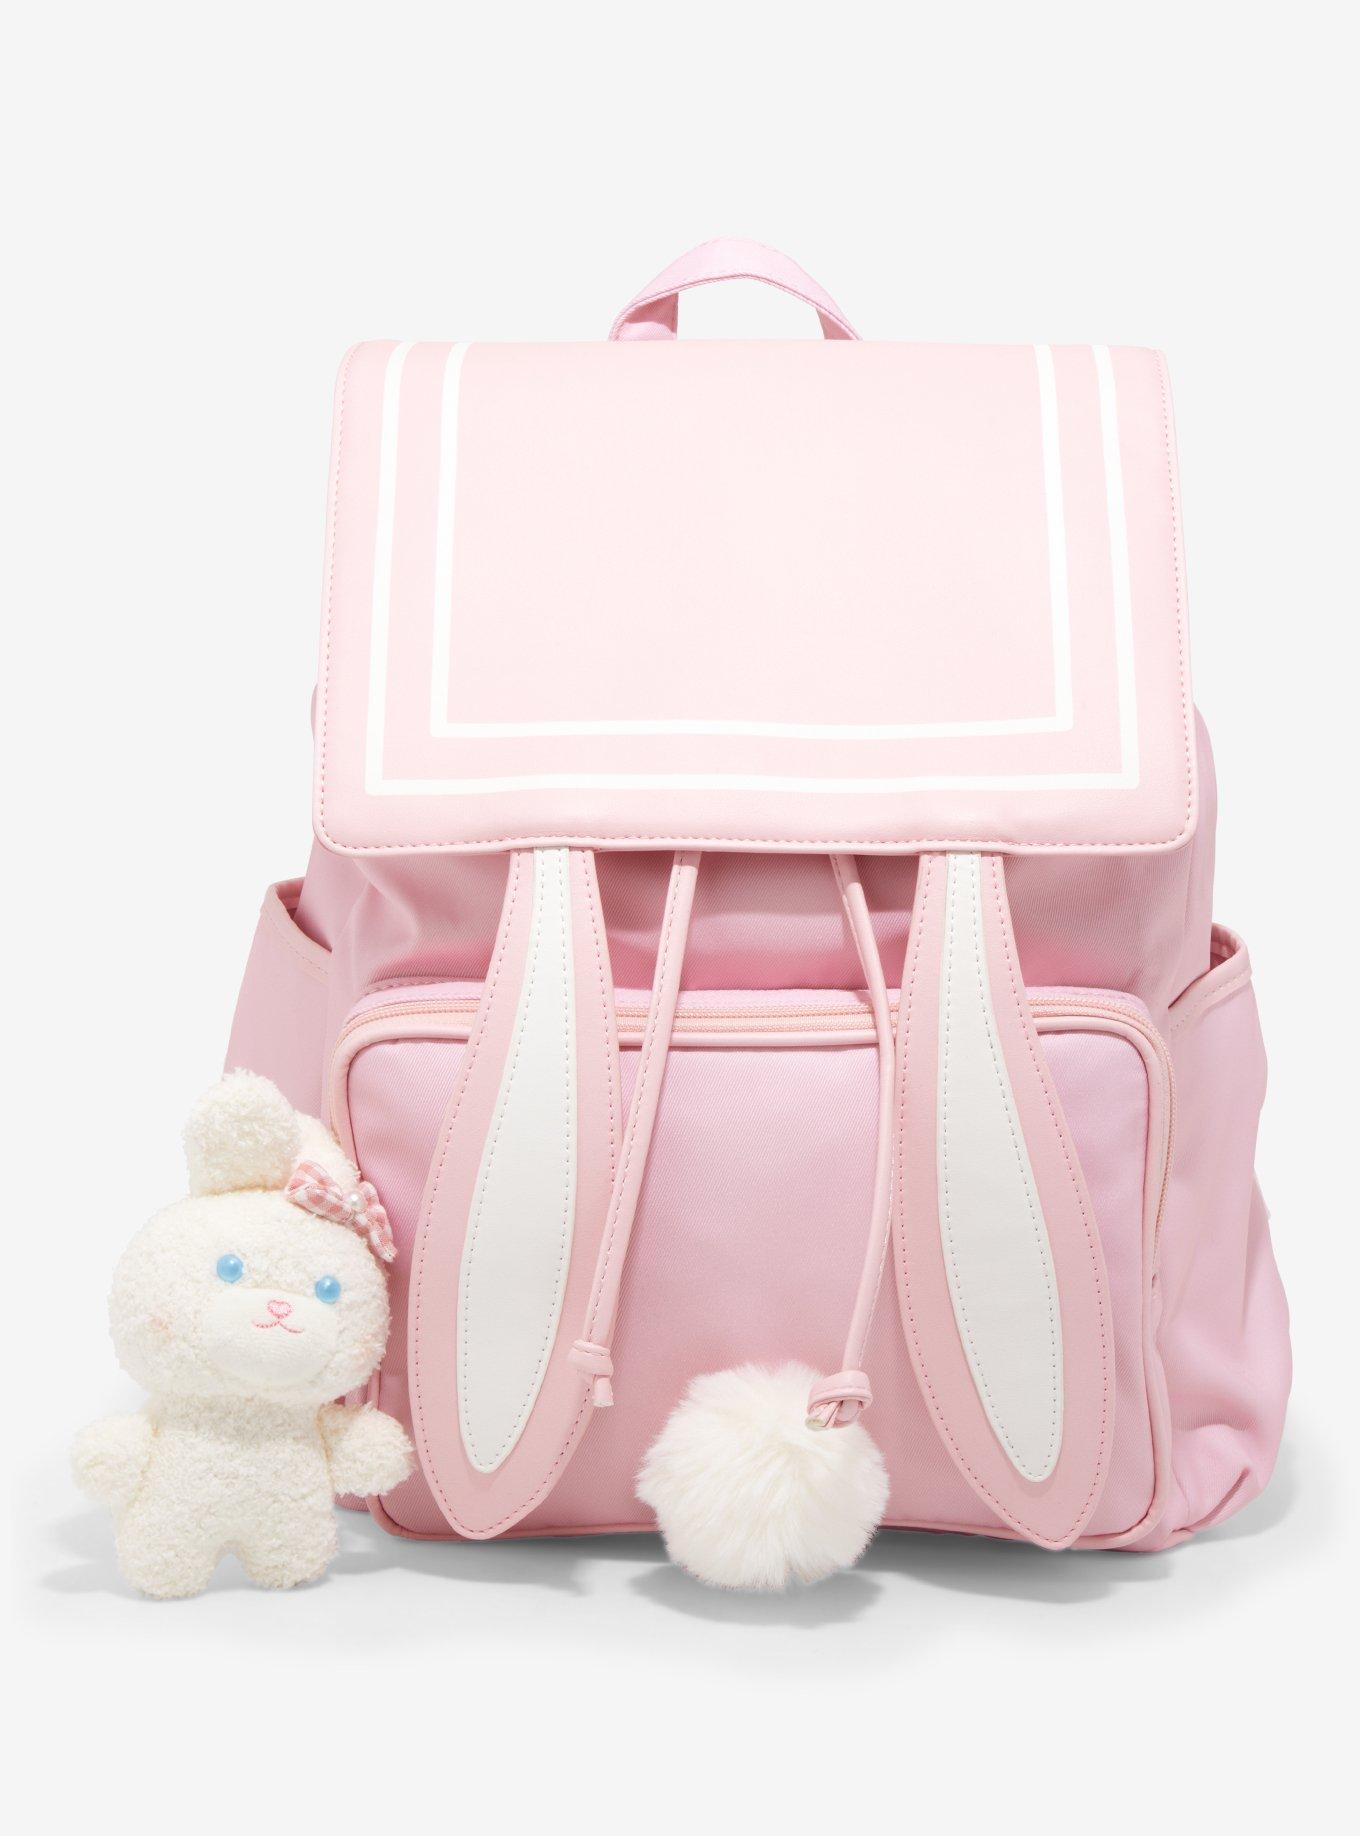 Sweet Pink Angel Bunny Rabbit Backpack Book Bag Satchel Kawaii